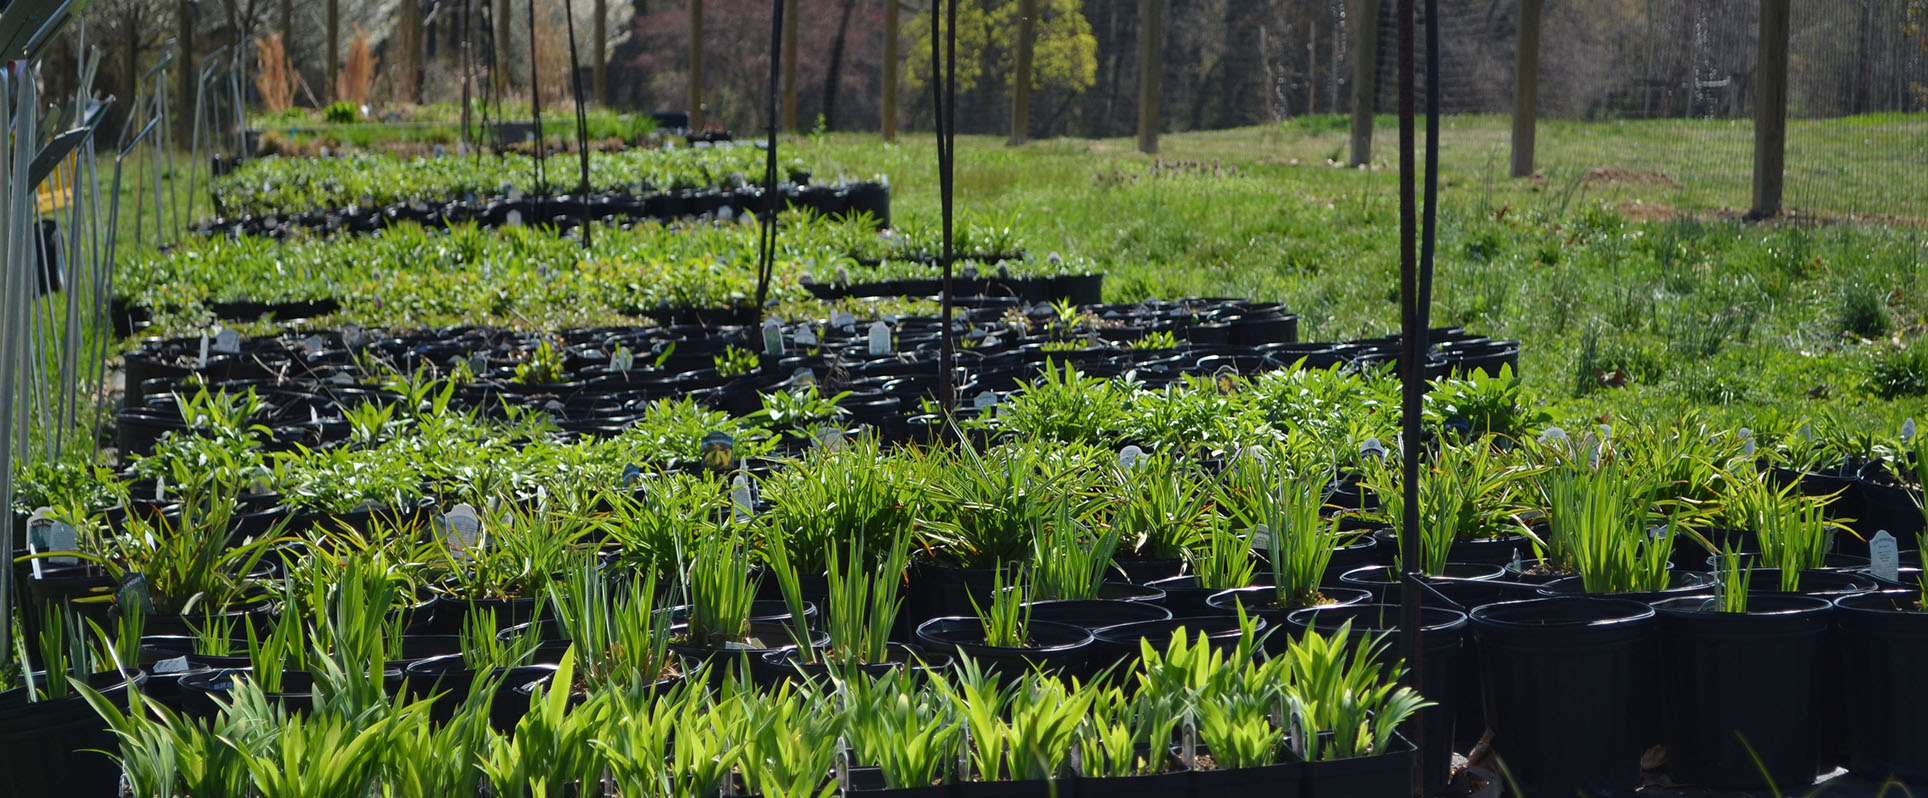 rows of green plants in black plastic pots